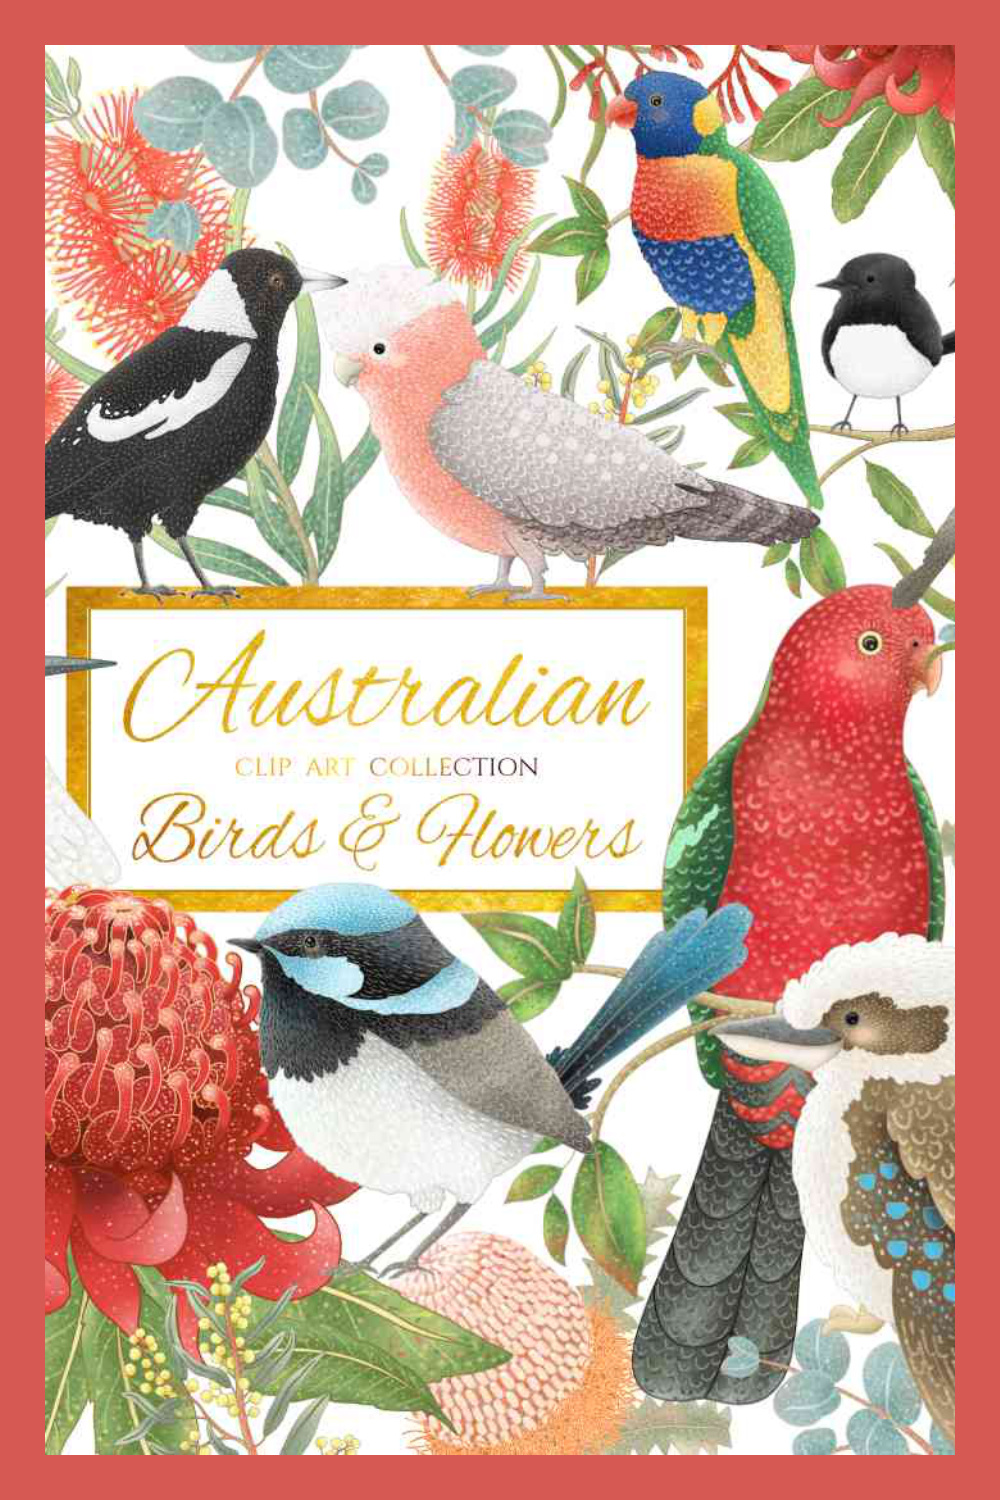 Australian Birds and Flowers Collection Clipart Design pinterest image.